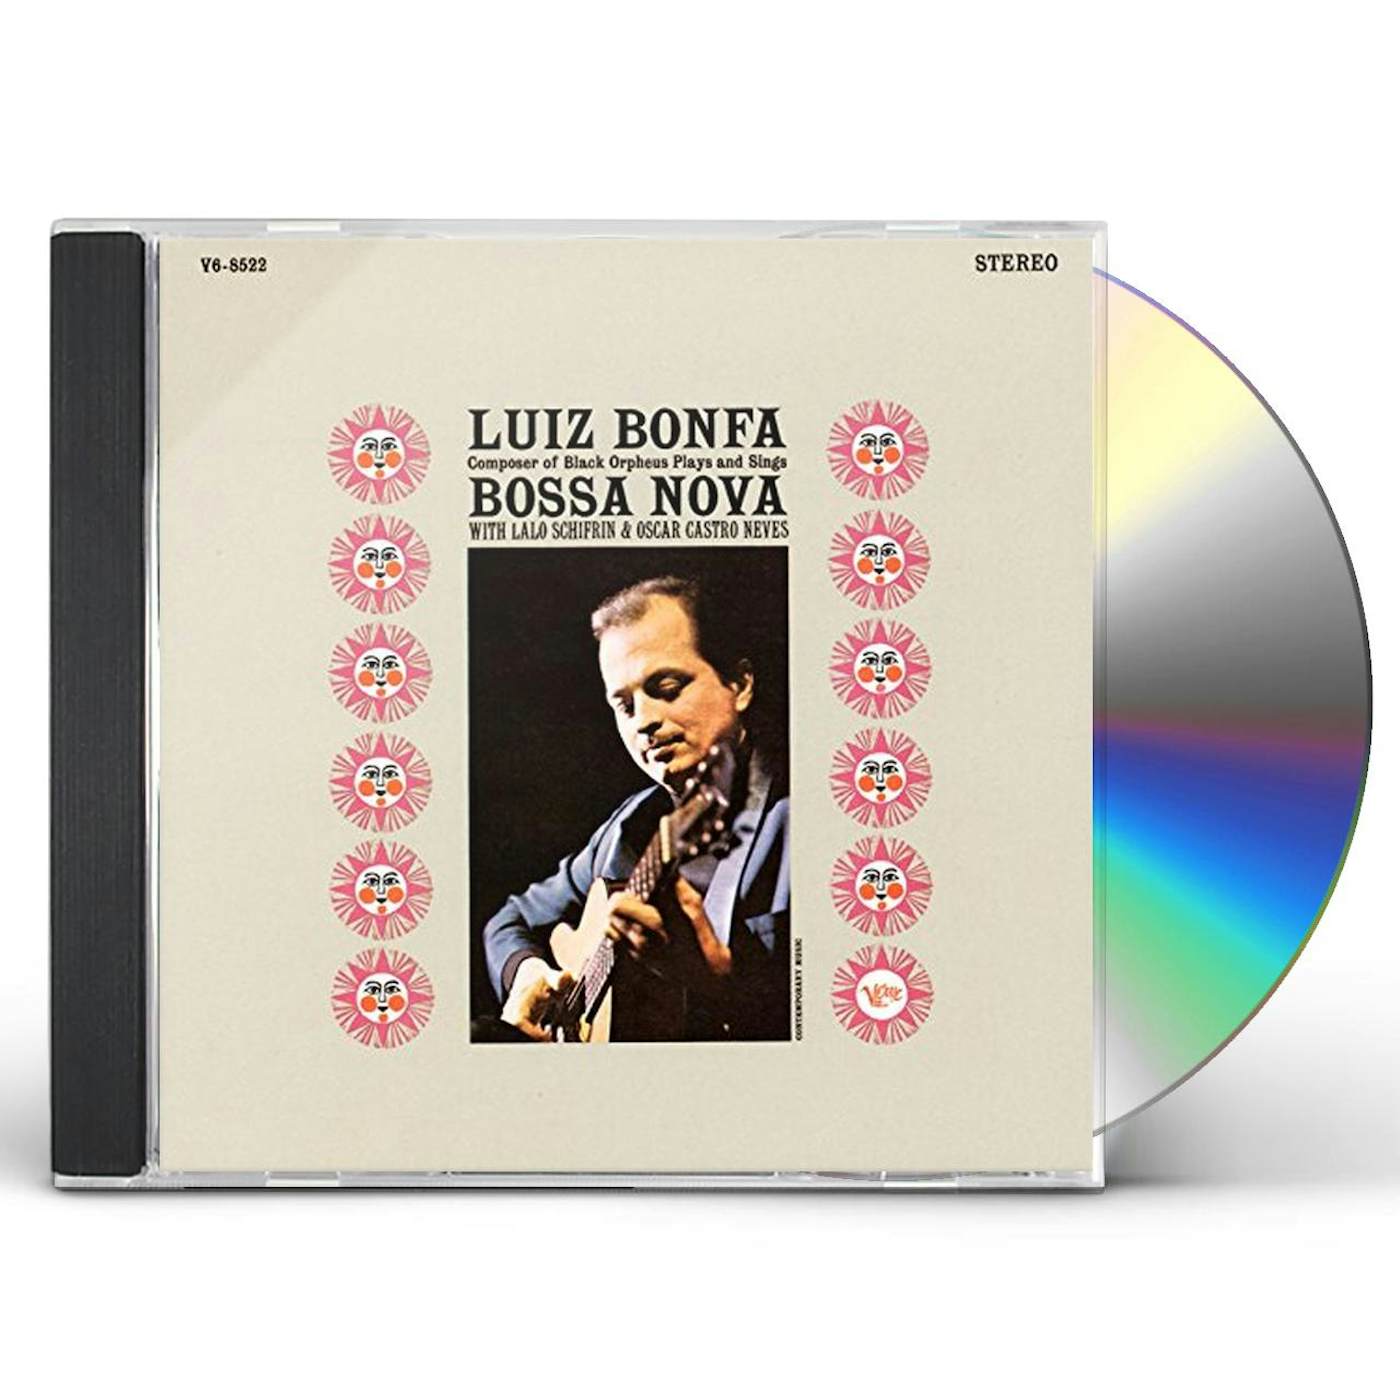 Luiz Bonfá COMPOSER OF BLACK ORPHEUS PLAYS & CD